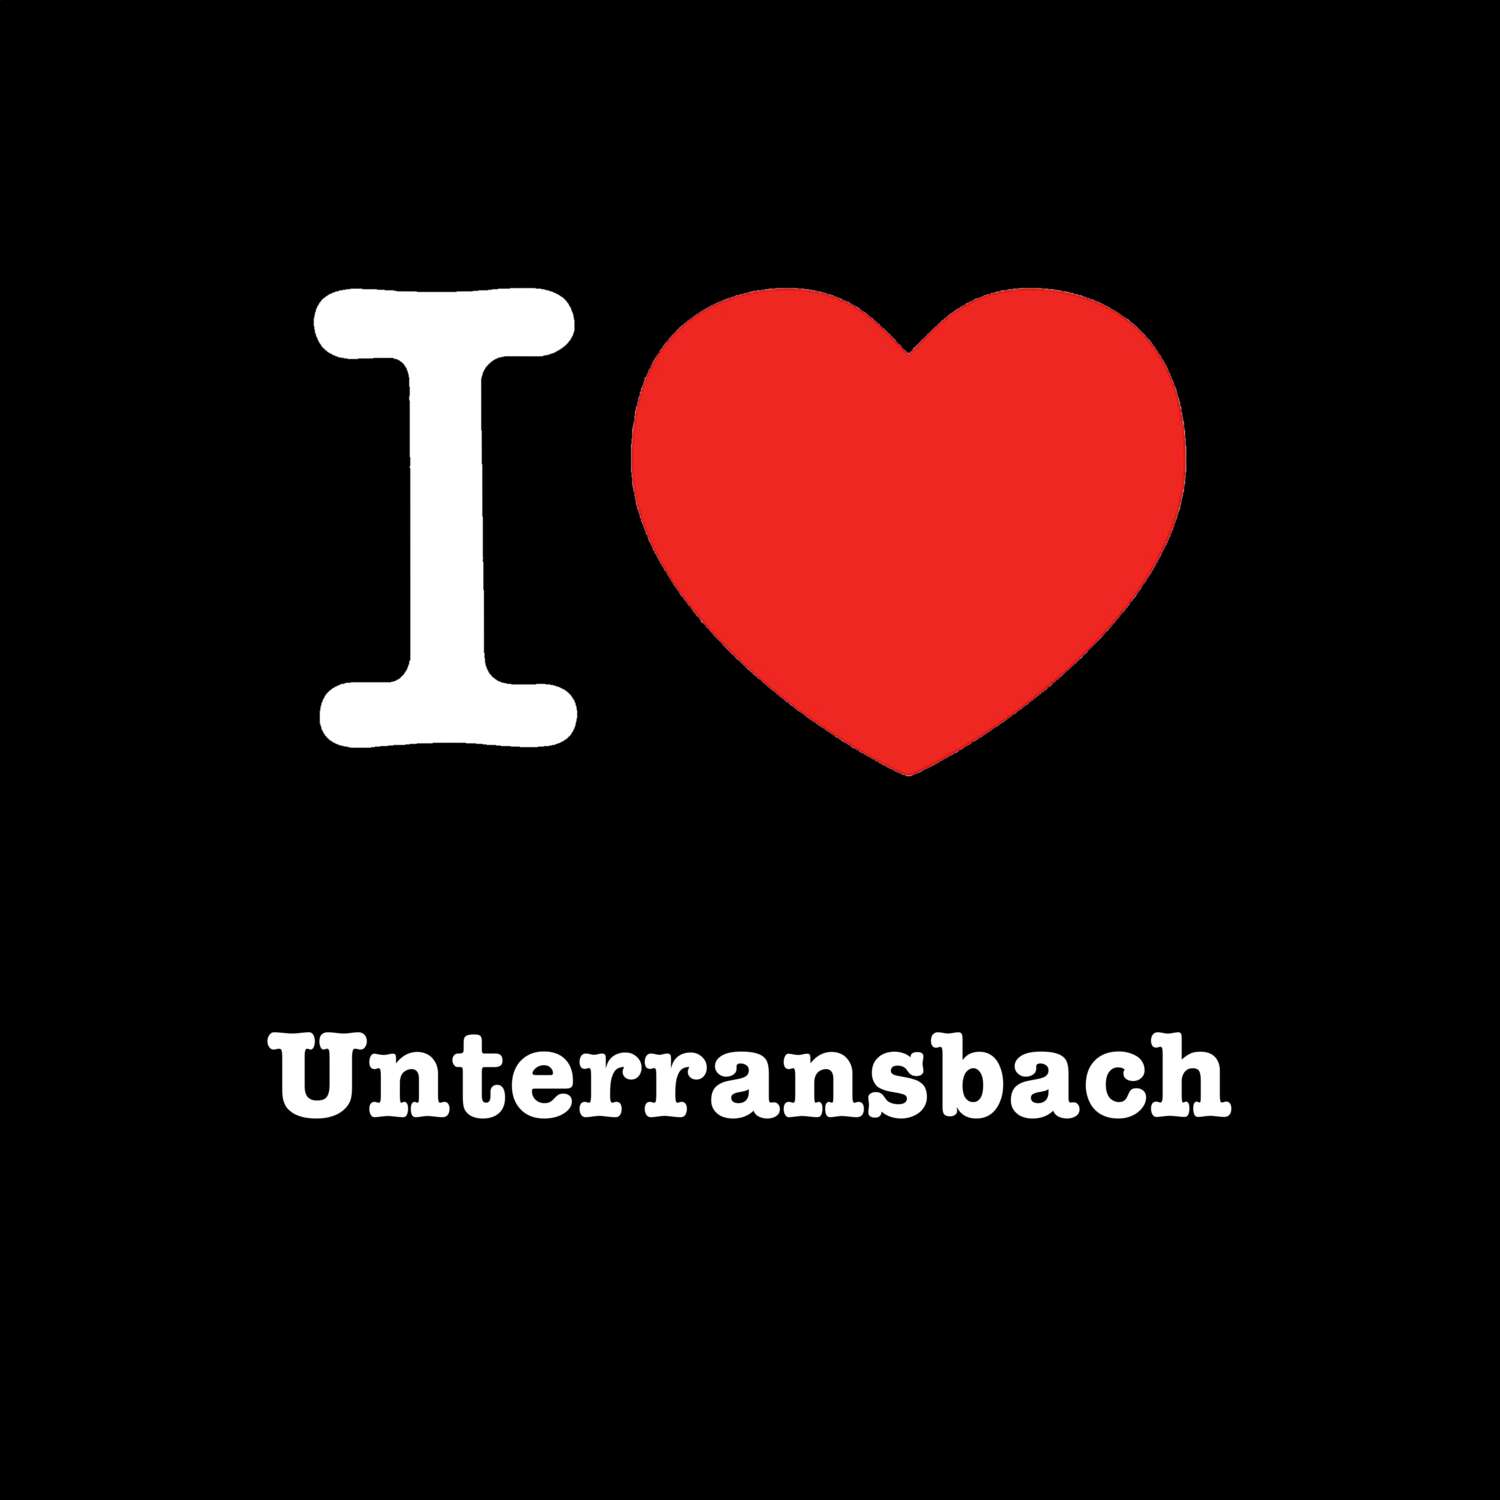 Unterransbach T-Shirt »I love«